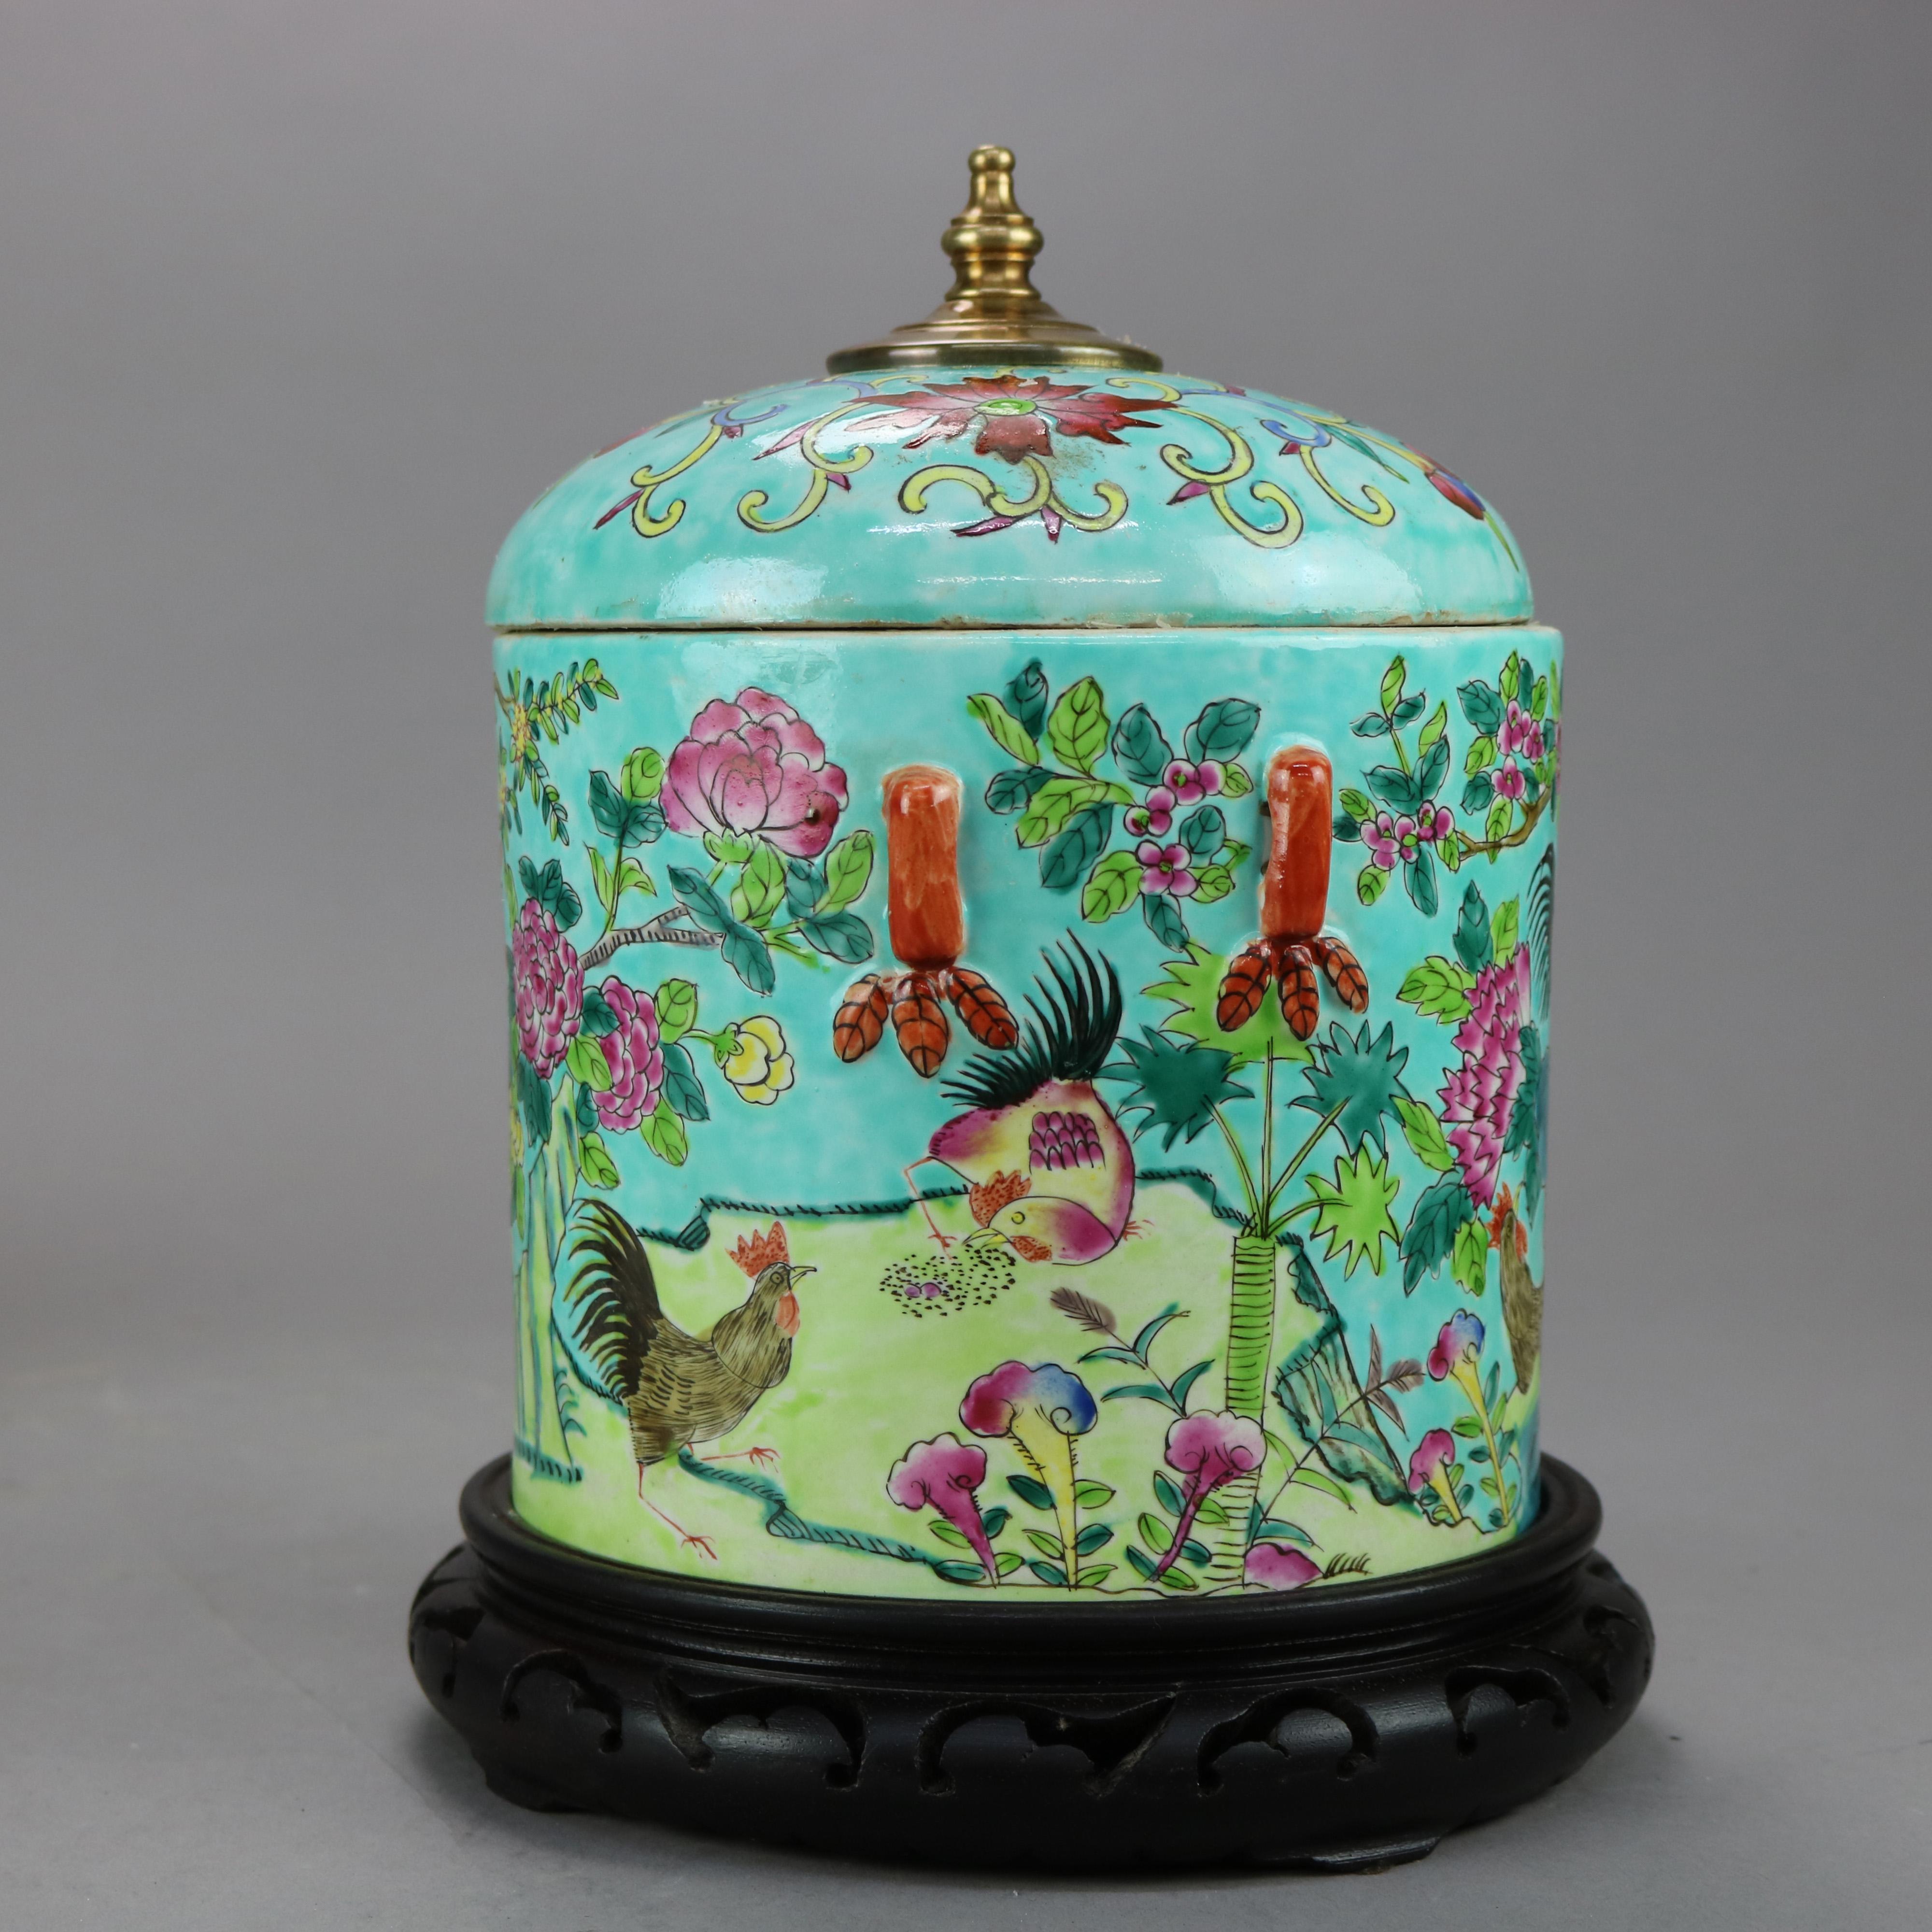 20th Century Antique Chinese Porcelain Urn Jar, Garden Motif, circa 1930’s